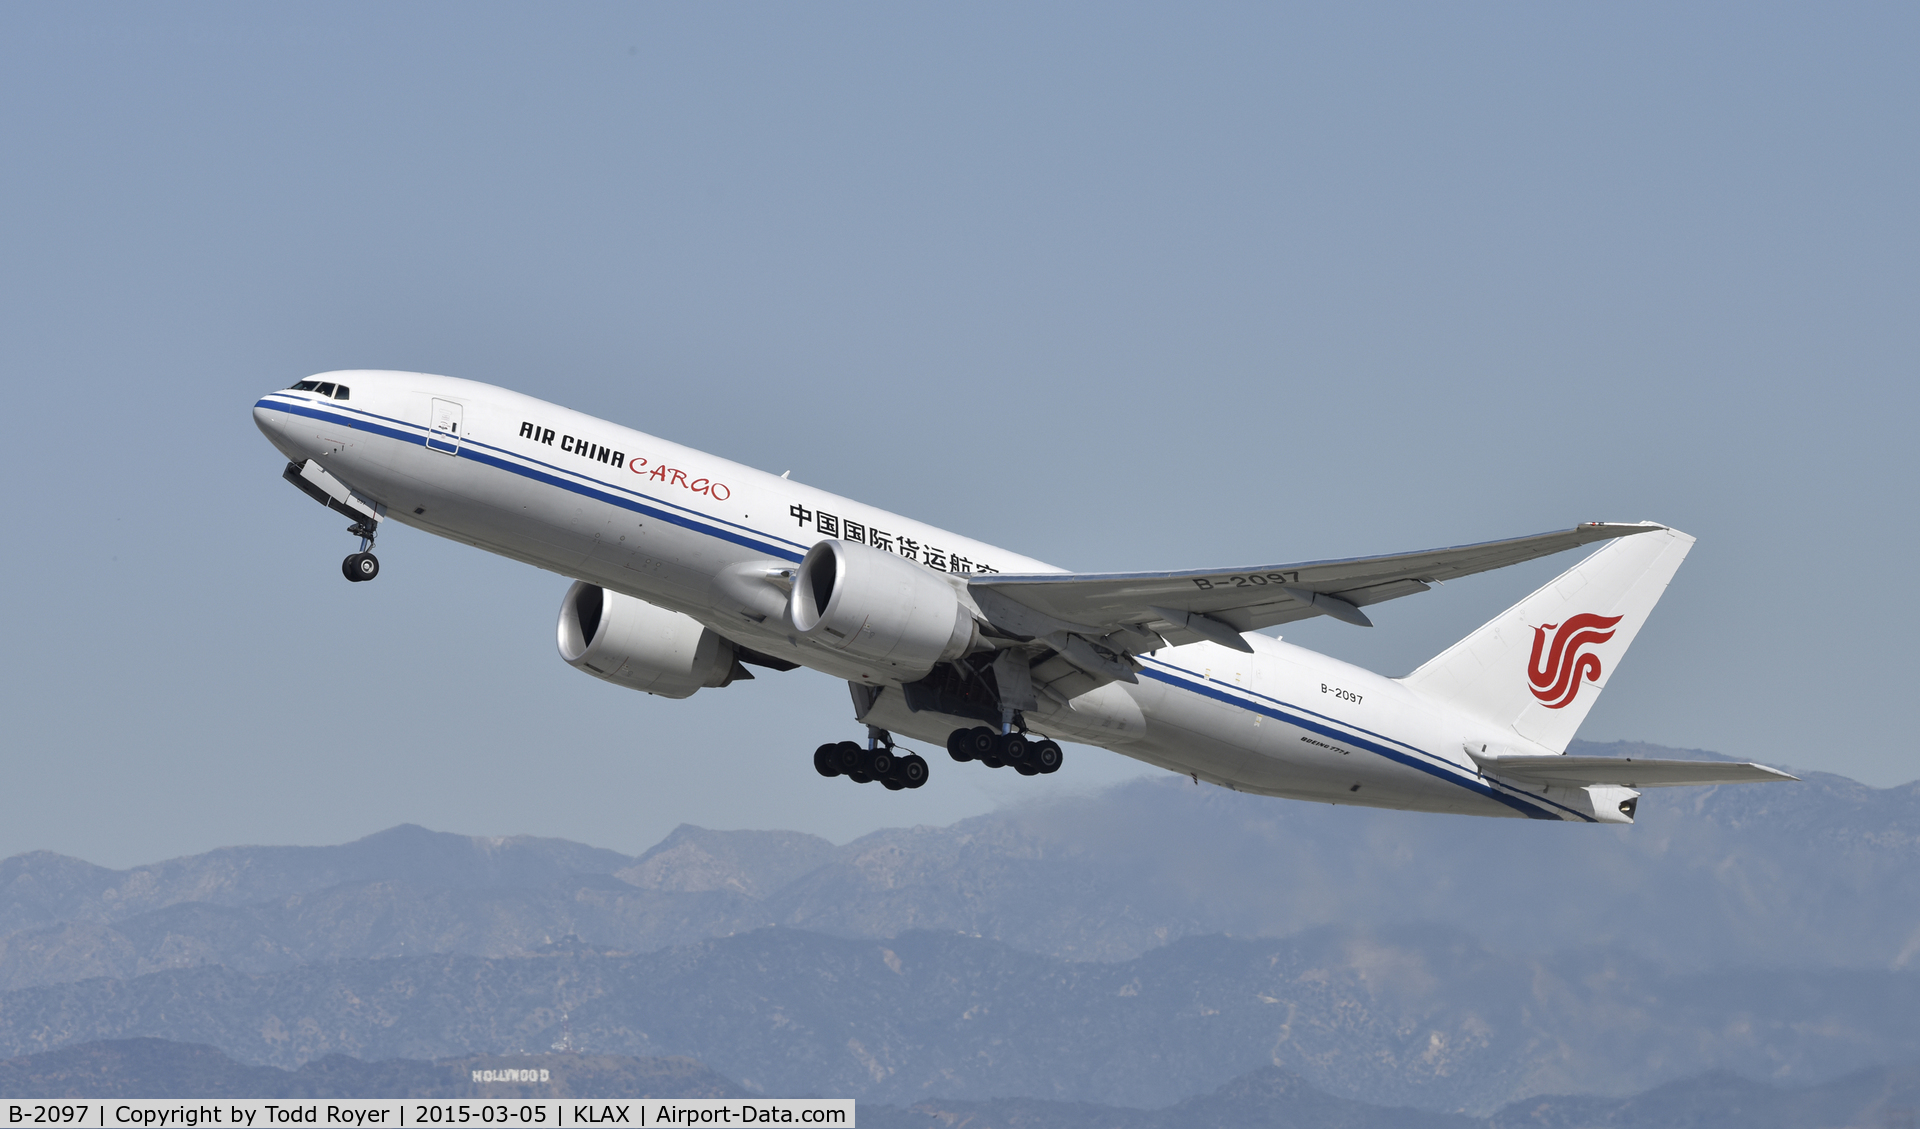 B-2097, 2014 Boeing 777-FFT C/N 44680, Departing LAX on 25R